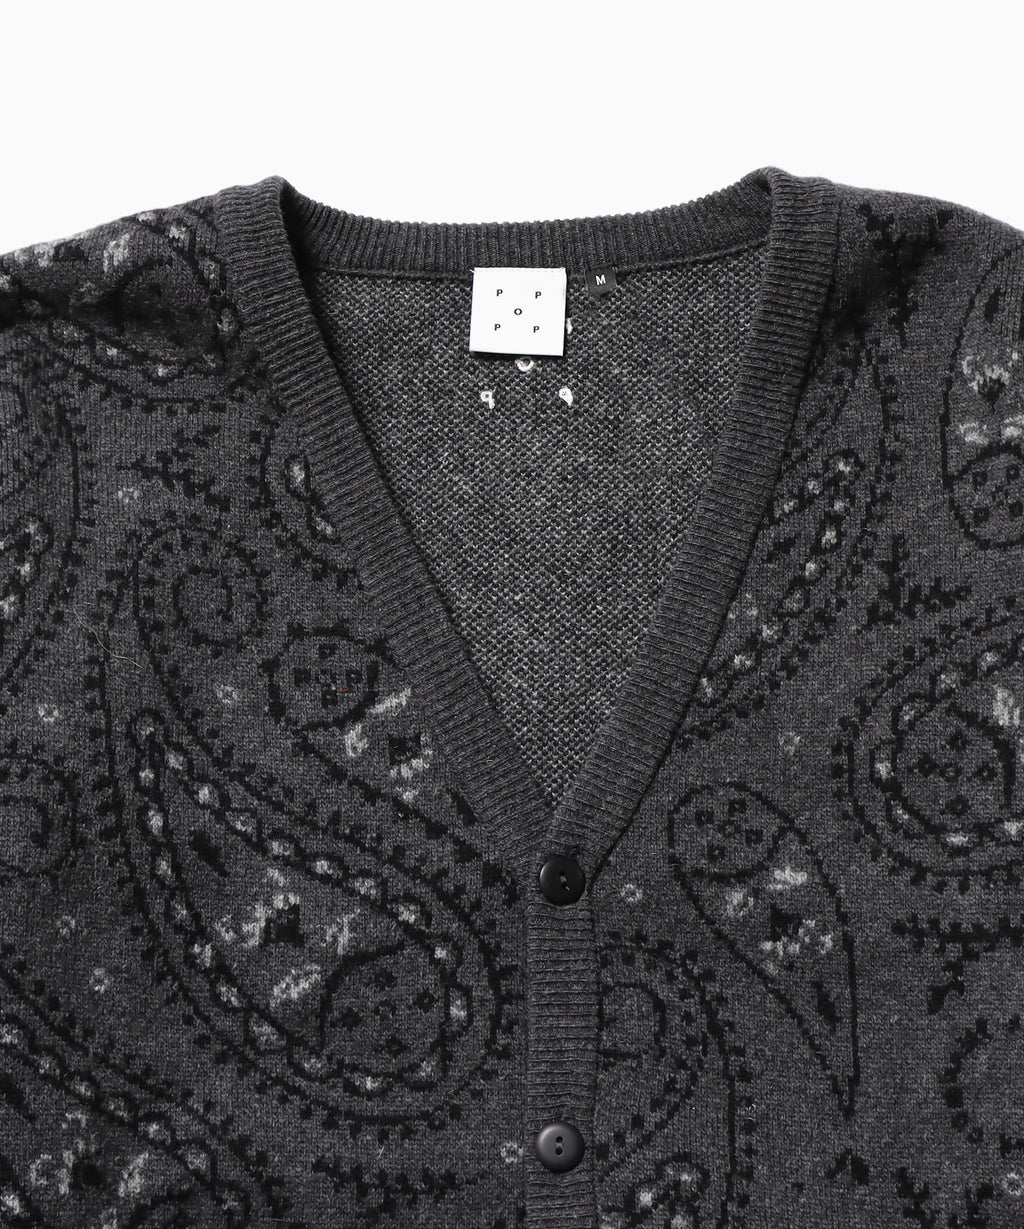 POP TRADING COMPANY/ポップトレーディングカンパニー paisley knitted